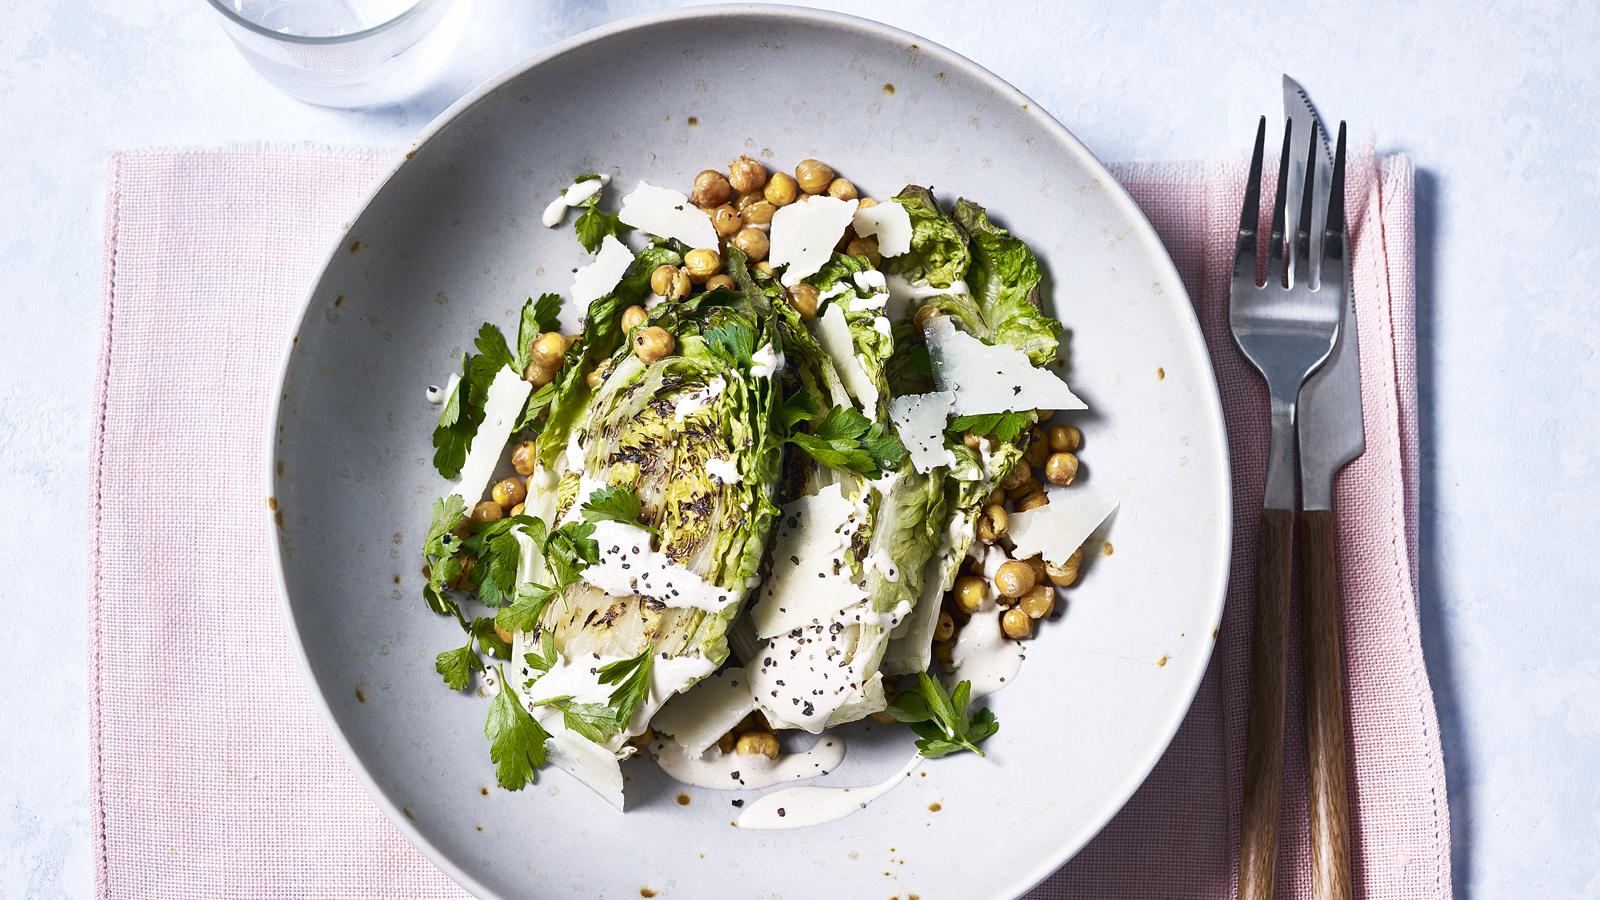 Caesar salad recipes - BBC Food